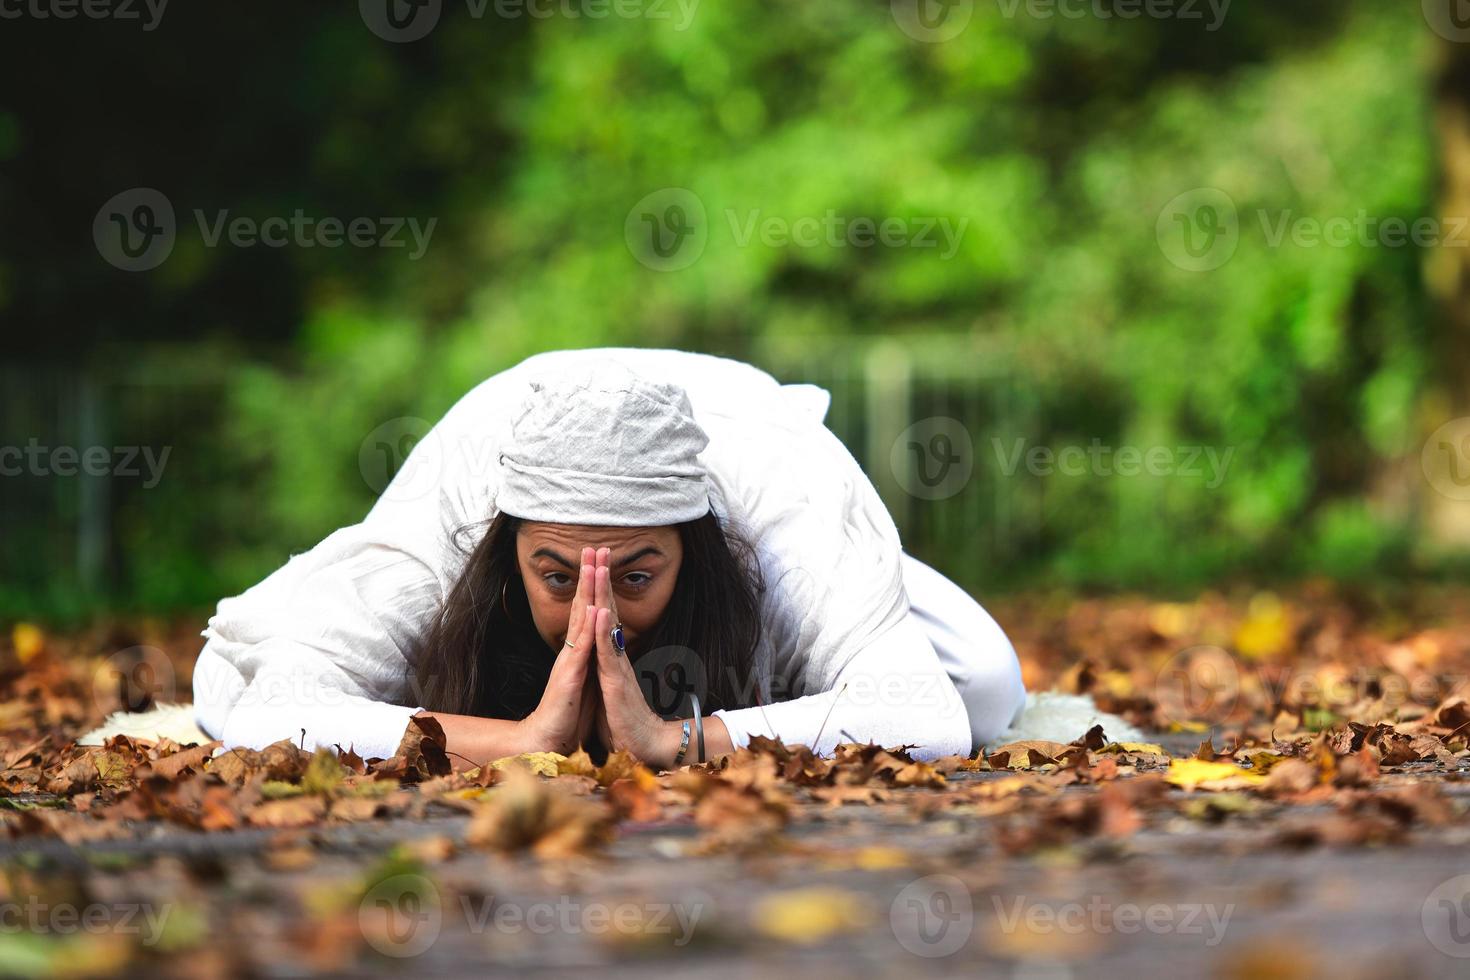 Yogaposition im Herbstlaub im Park foto